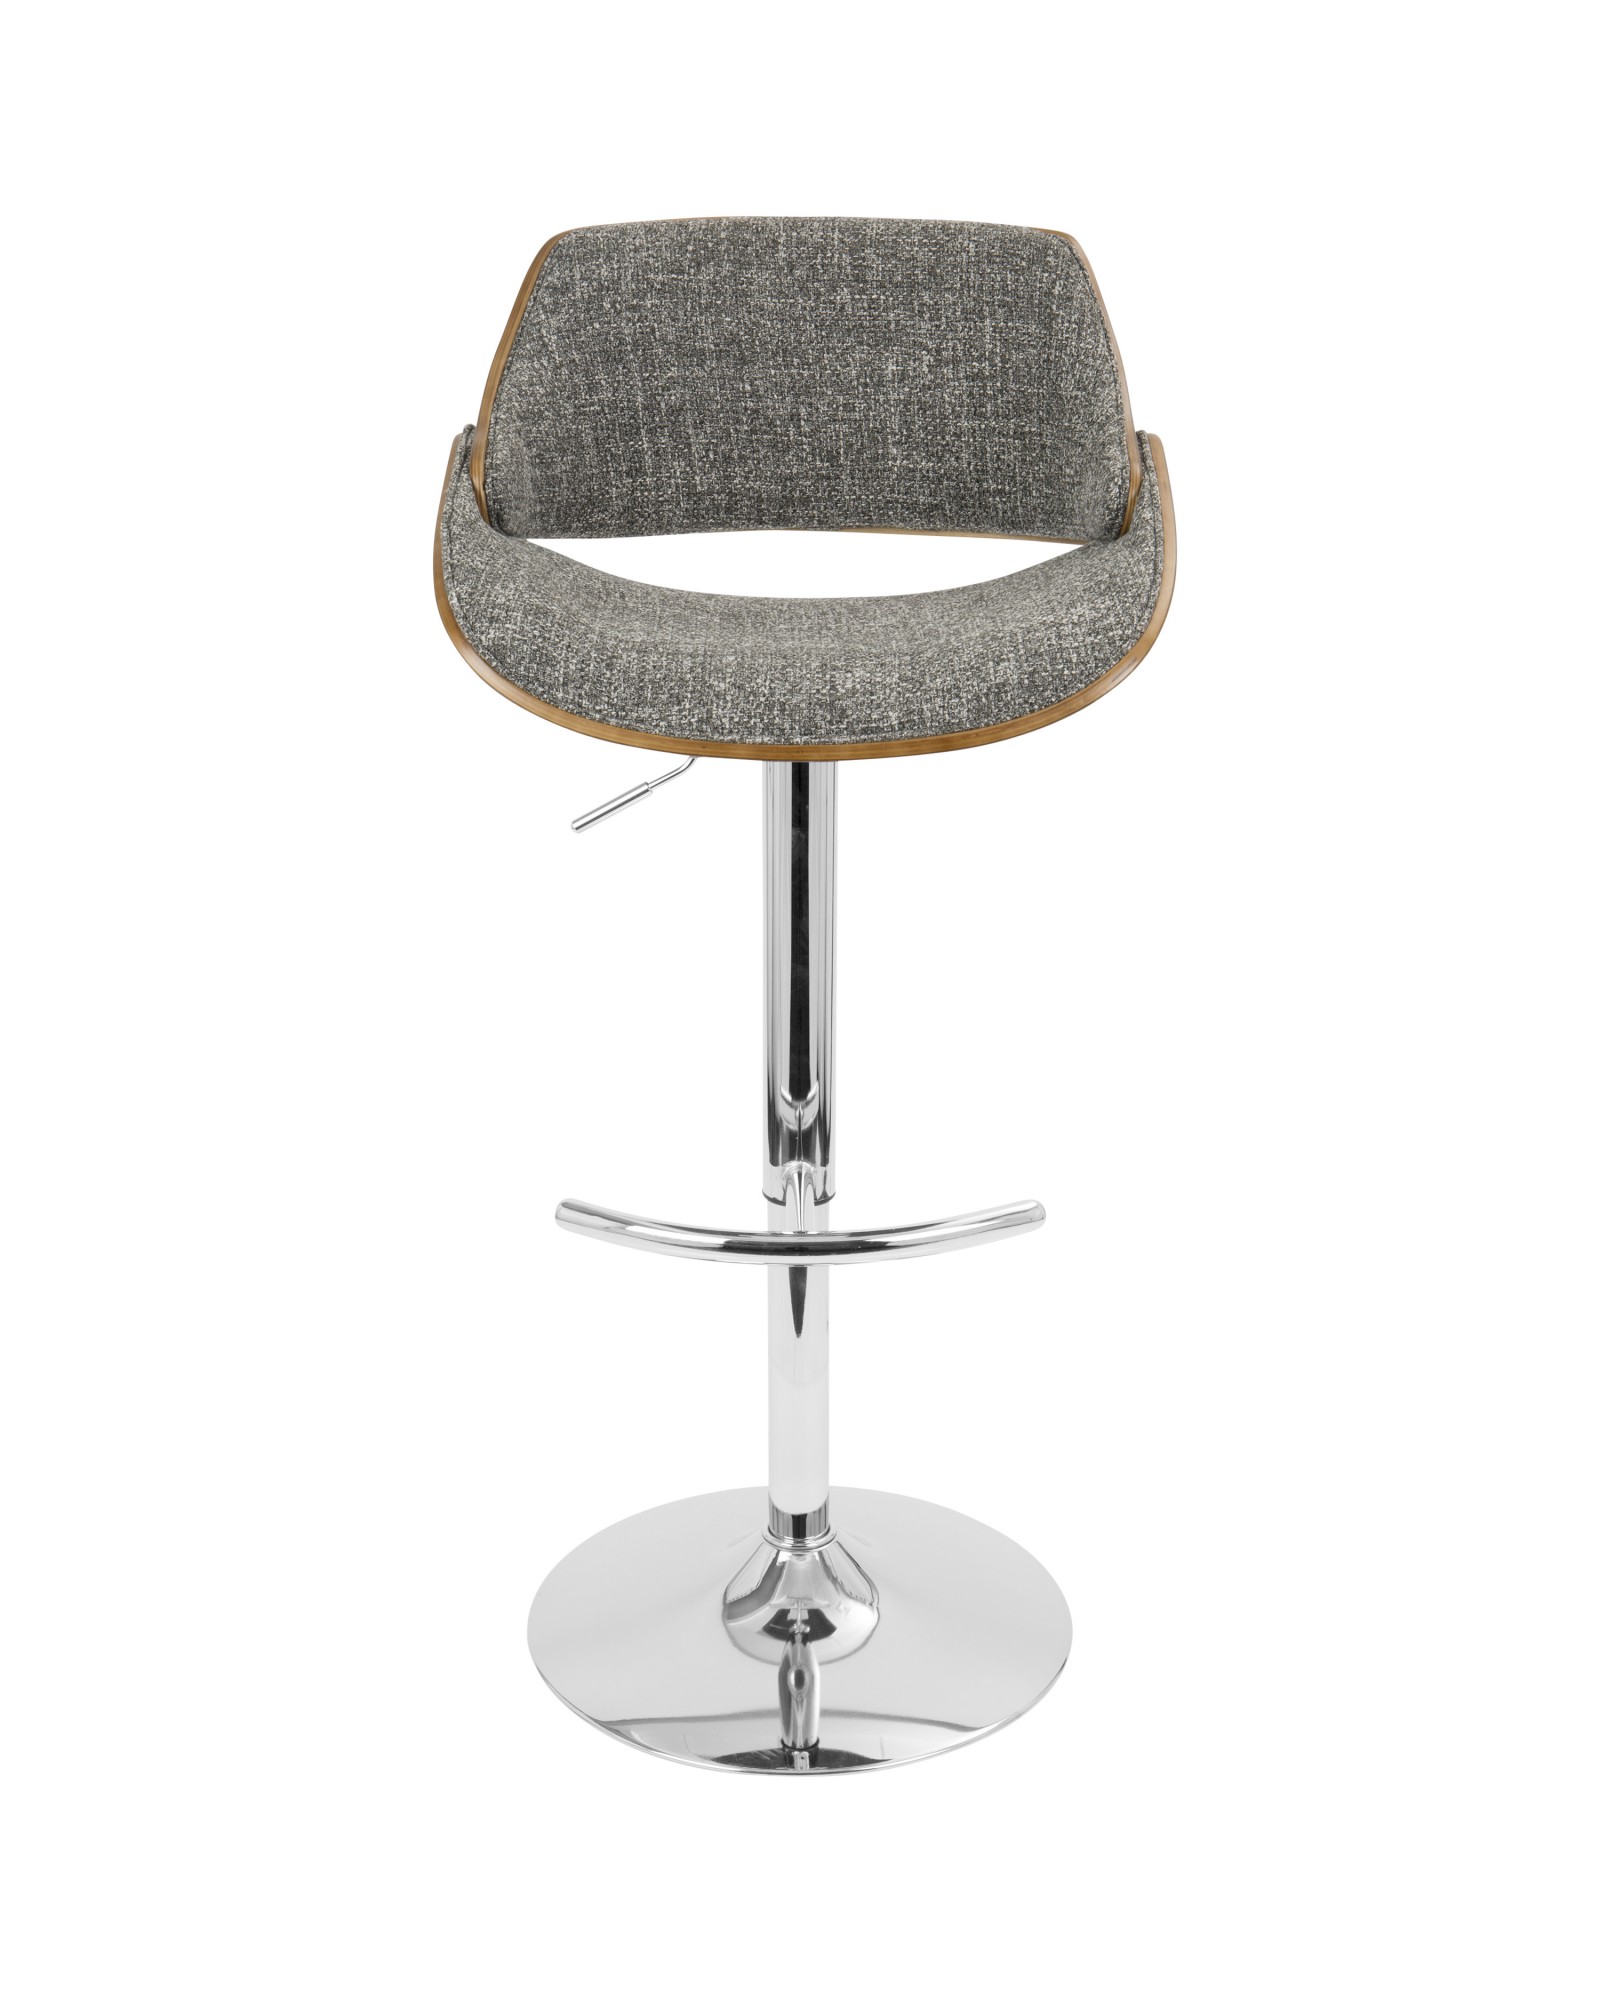 Fabrizzi Mid-Century Modern Adjustable Barstool with Swivel in Walnut and Grey